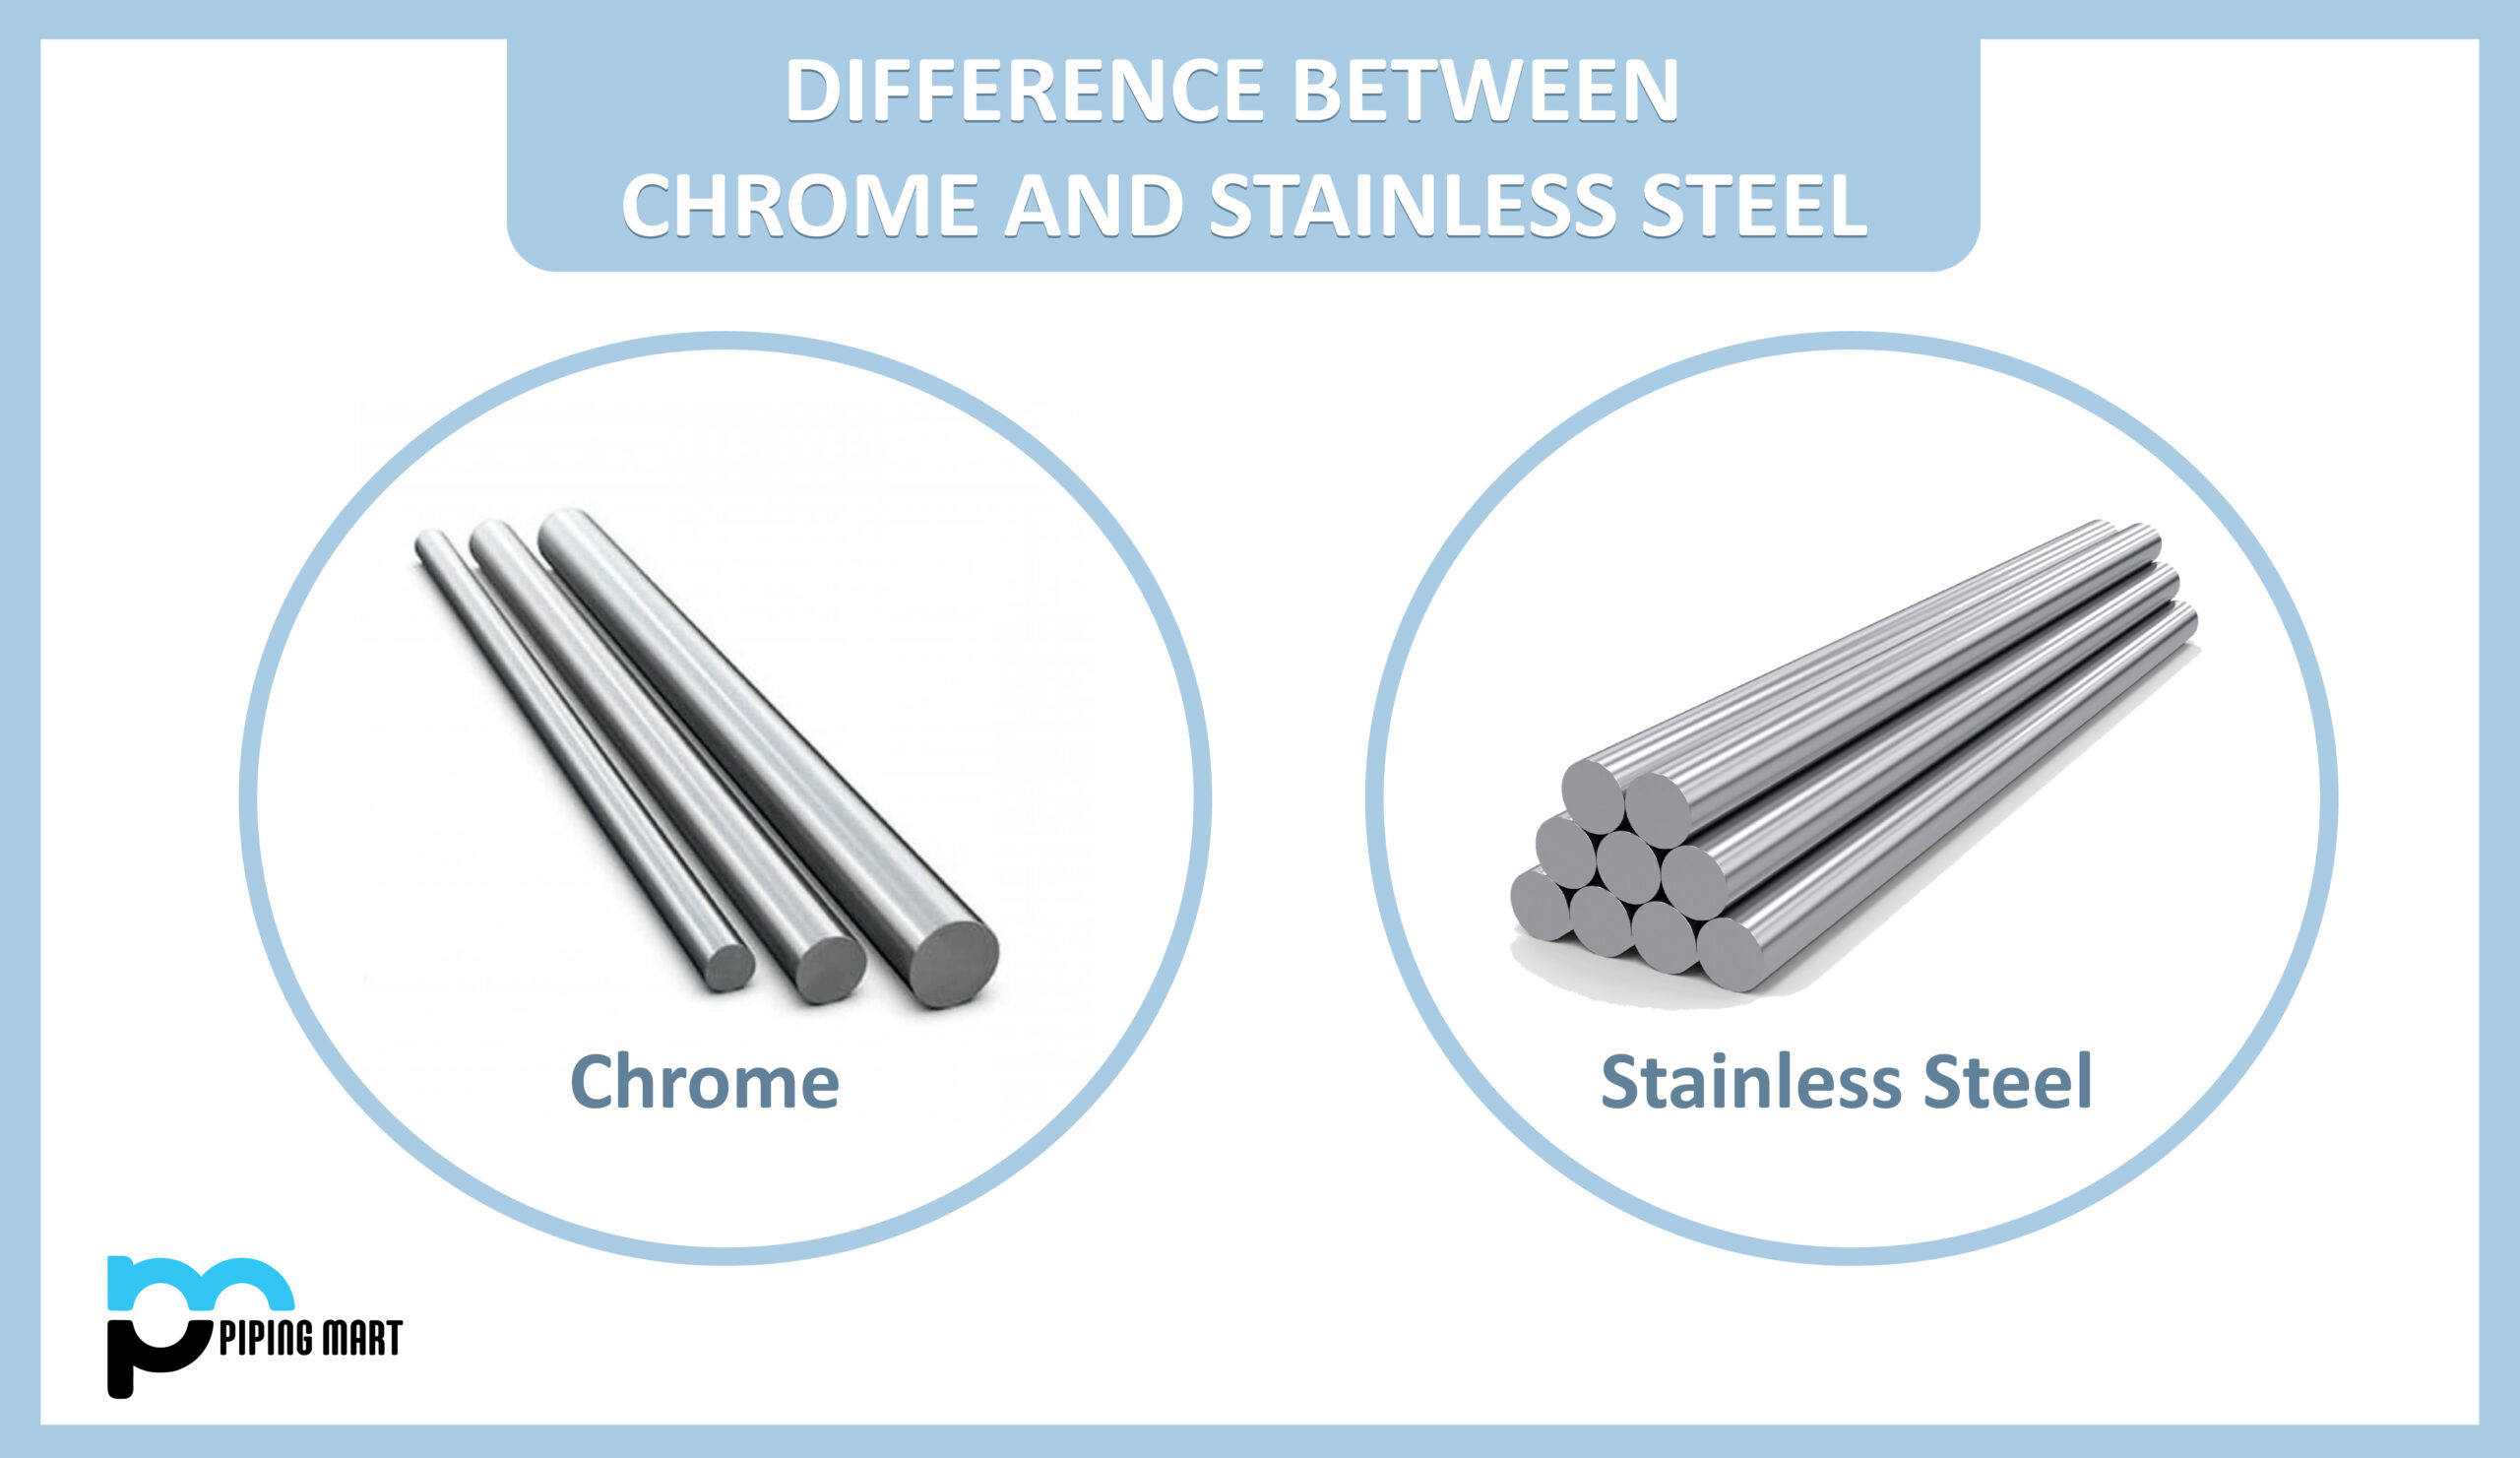 chrome vs stainless steel kitchen sink